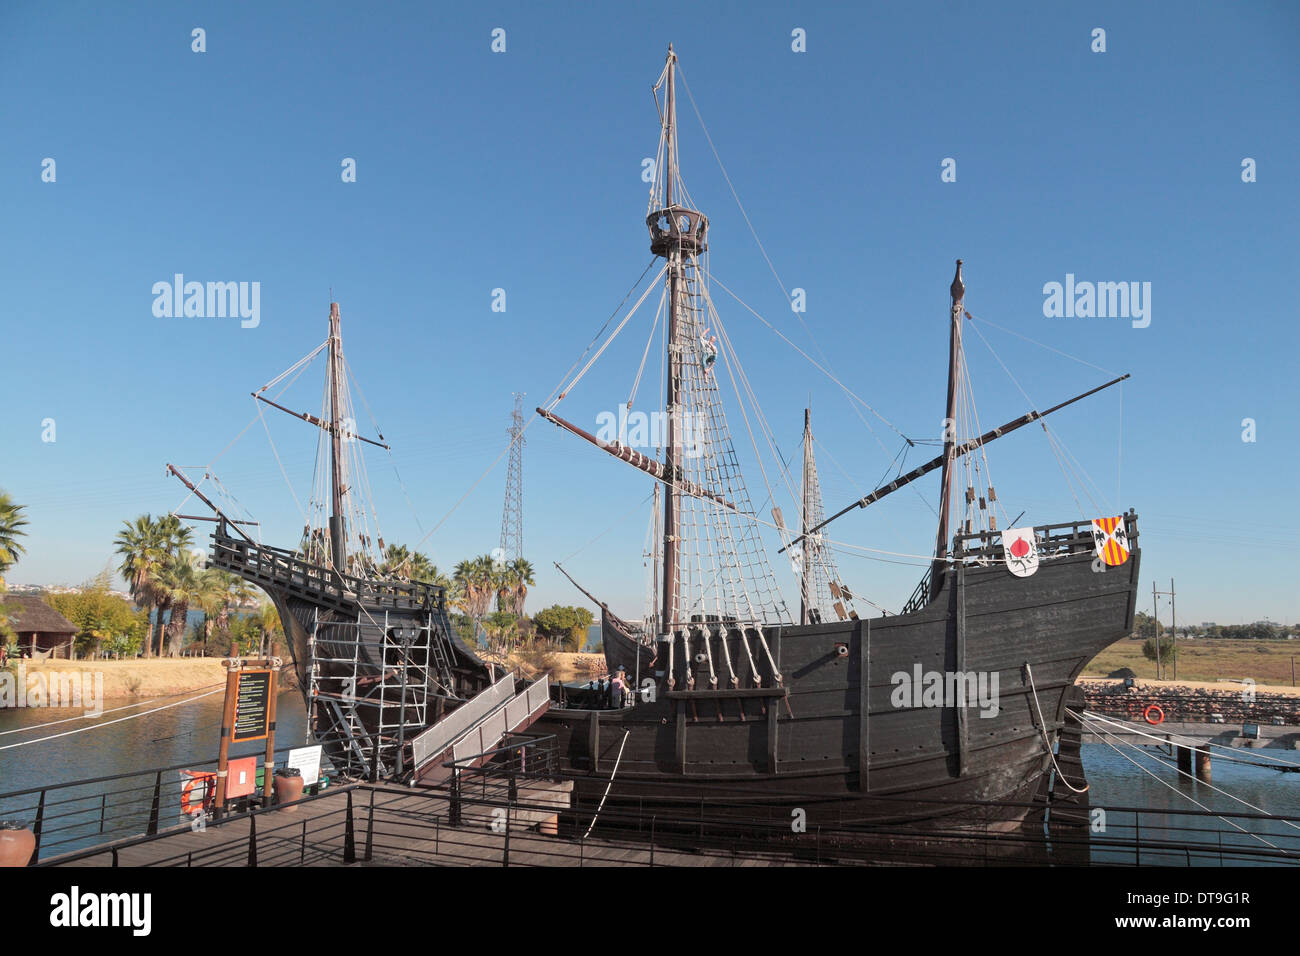 The Santa Maria  replica ship in the Wharf of the Caravels, Huelva, Andalusia, Spain. Stock Photo